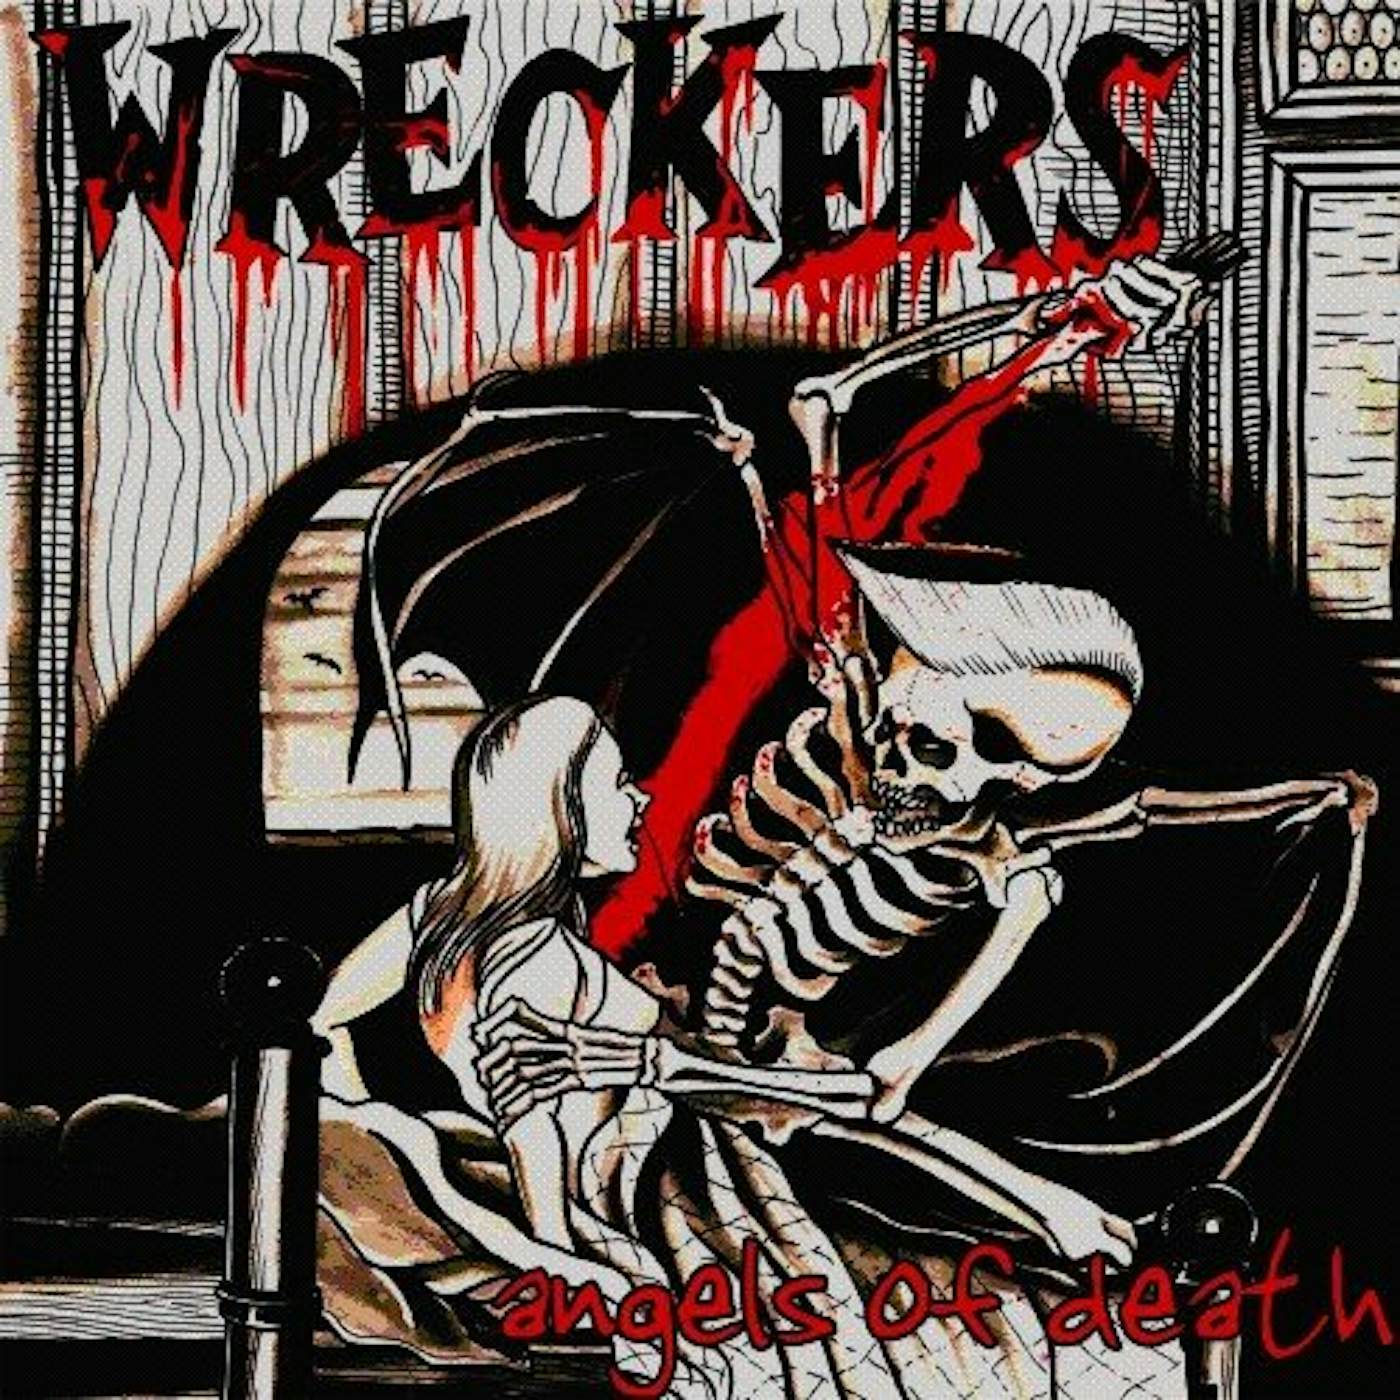 Wreckers Angel Of Death Vinyl Record